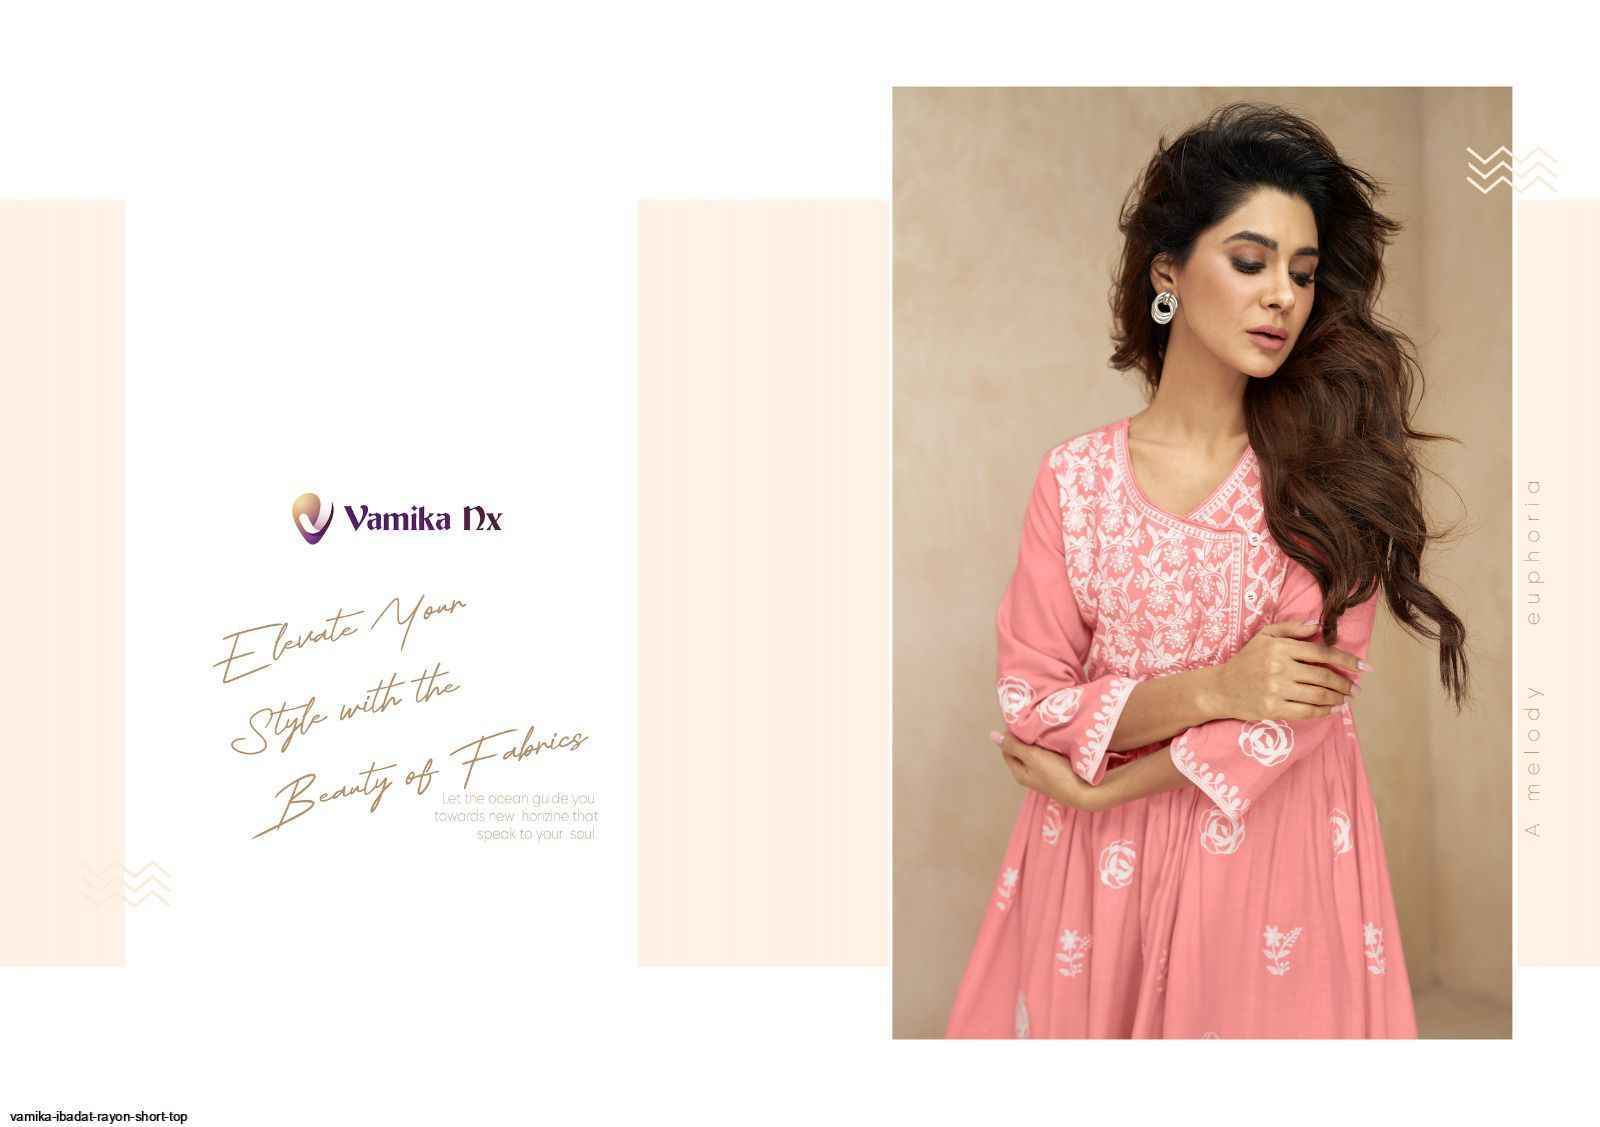 Vamika Ibadat Rayon Tops 6 pcs Catalogue - Wholesale Factory